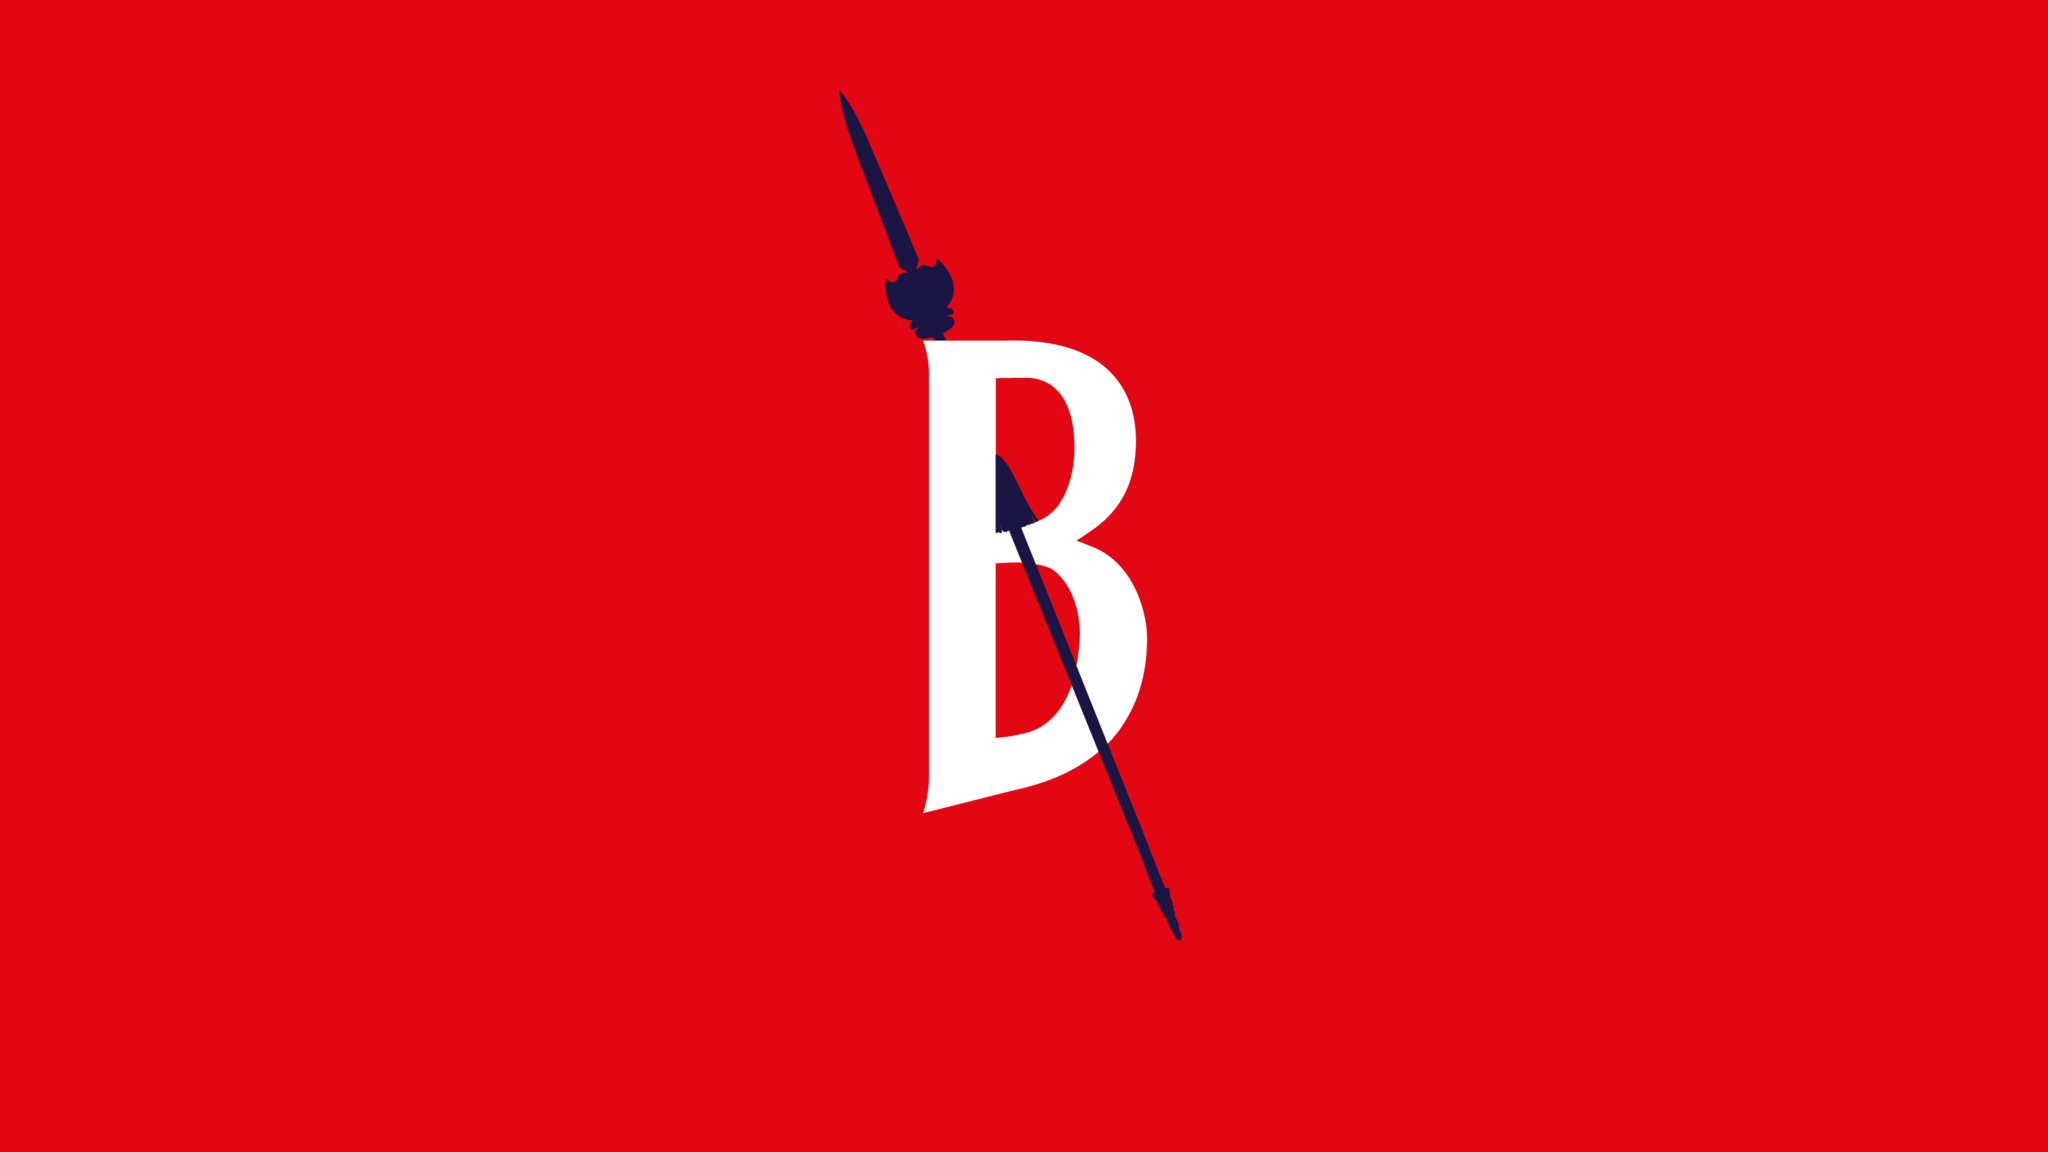 beefeater b logo aspect ratio 16 9